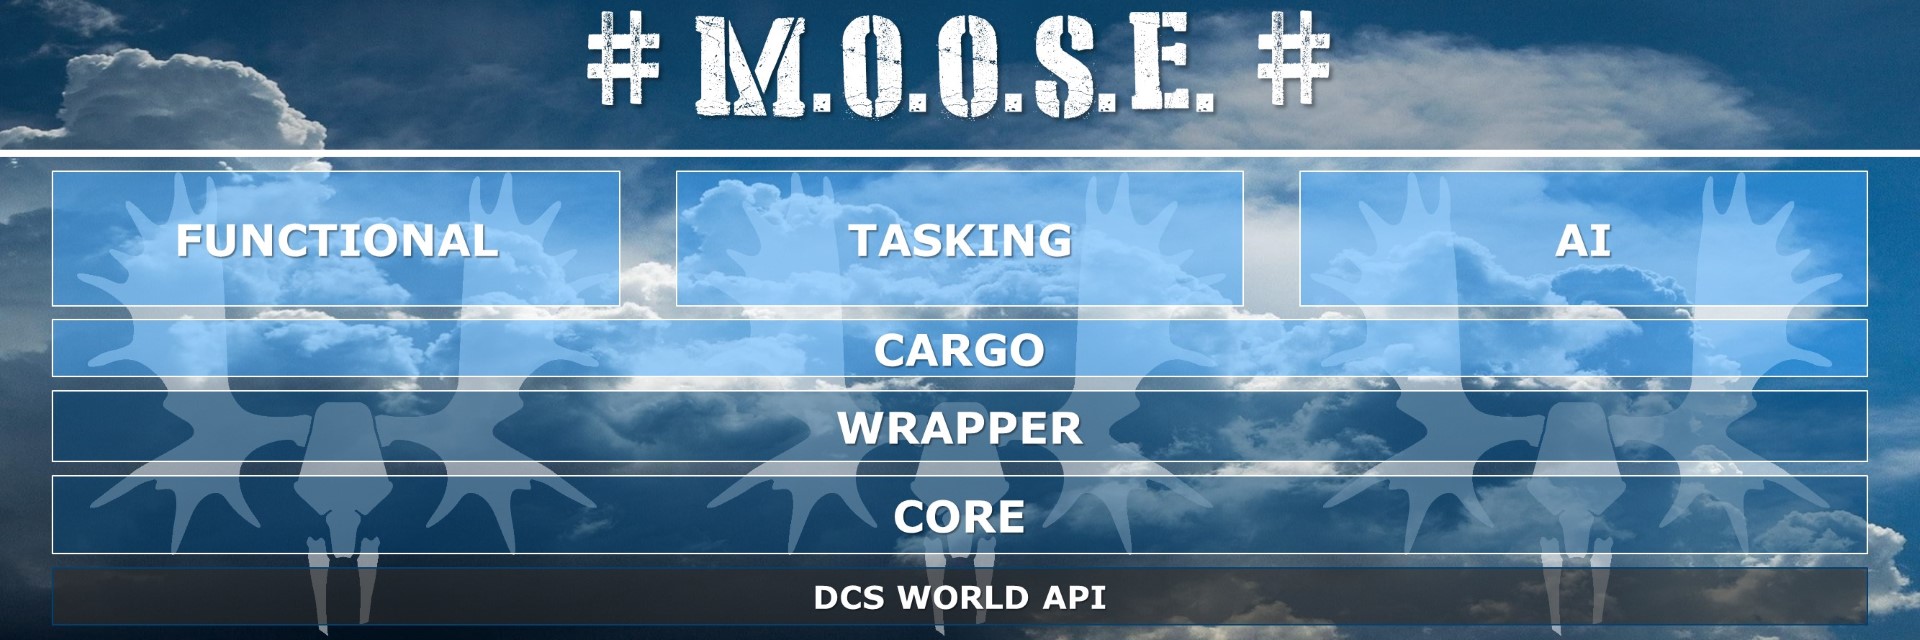 MOOSE framework